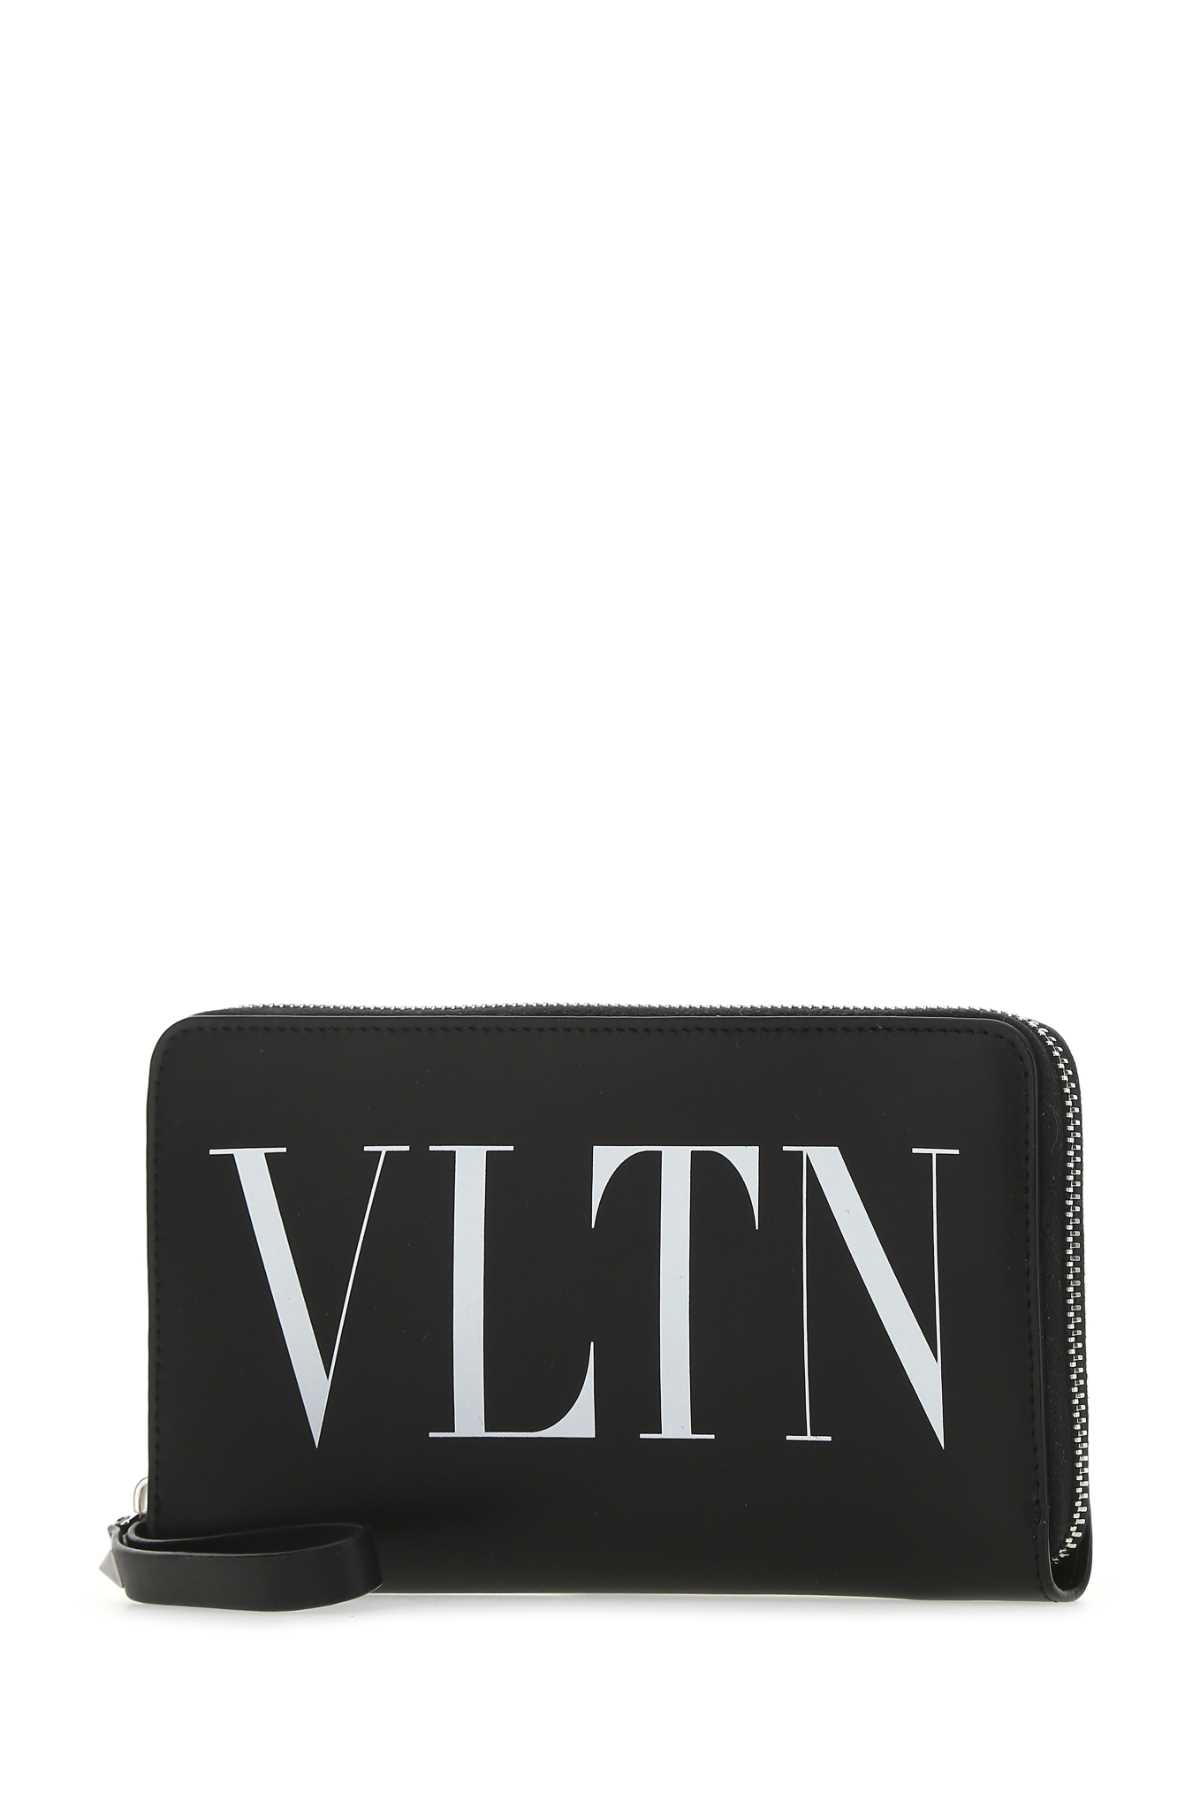 Shop Valentino Black Leather Vltn Wallet In Nerobianco